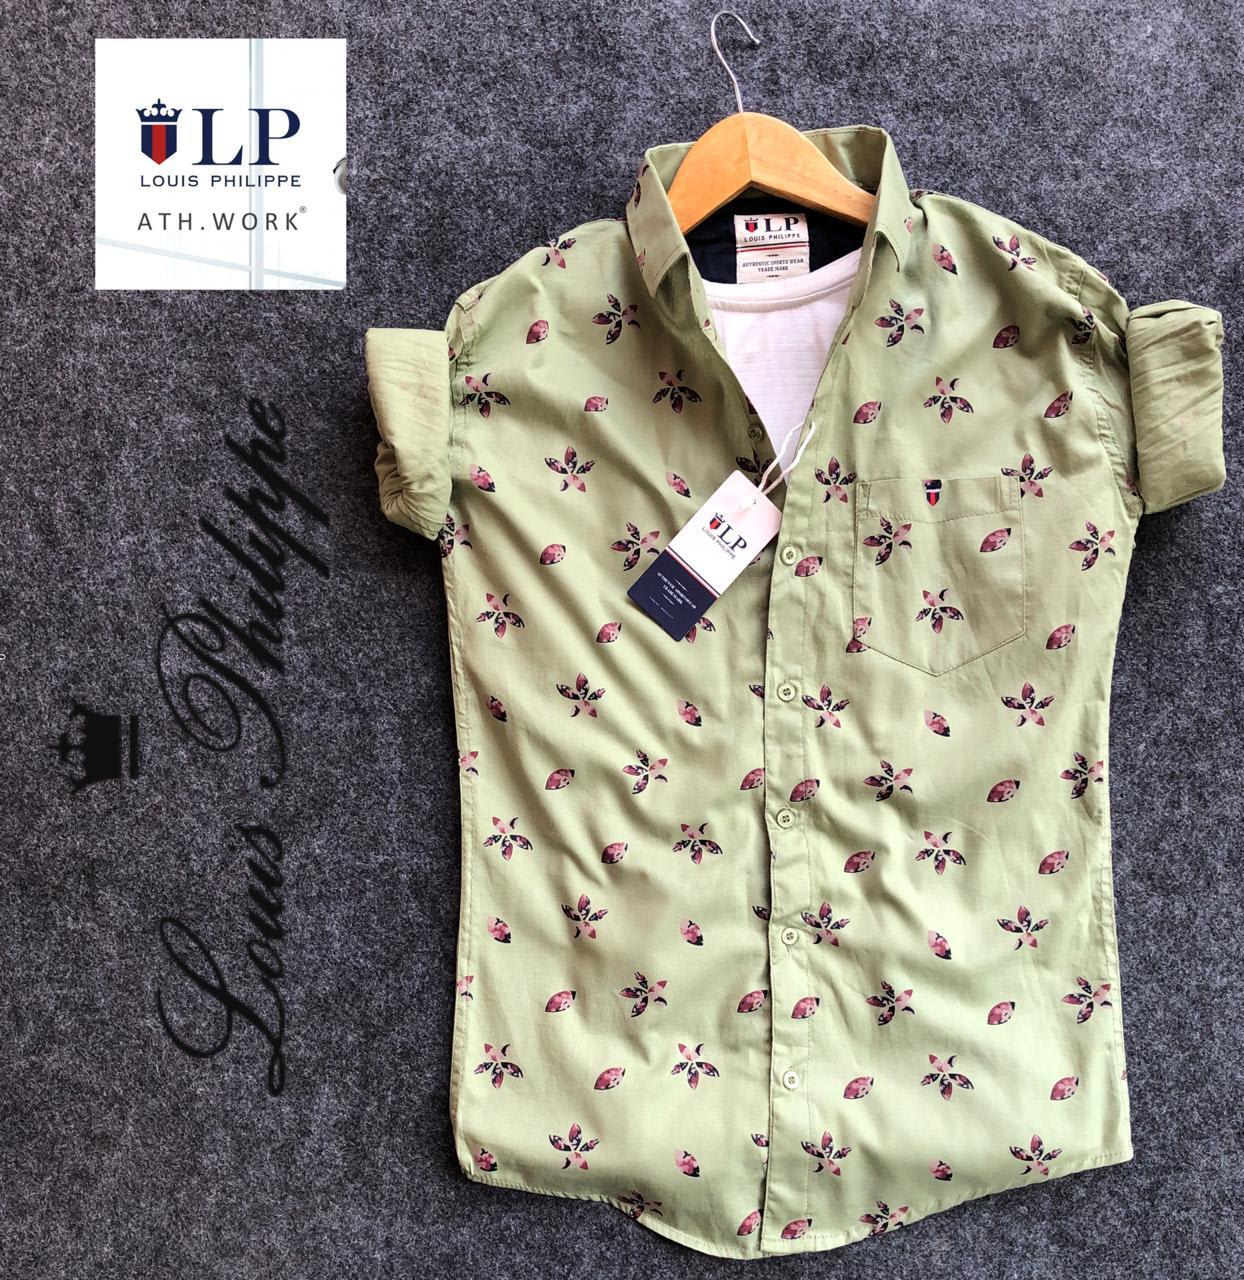 Louis Philippe in Bodakdev,Ahmedabad - Best Men Readymade Garment